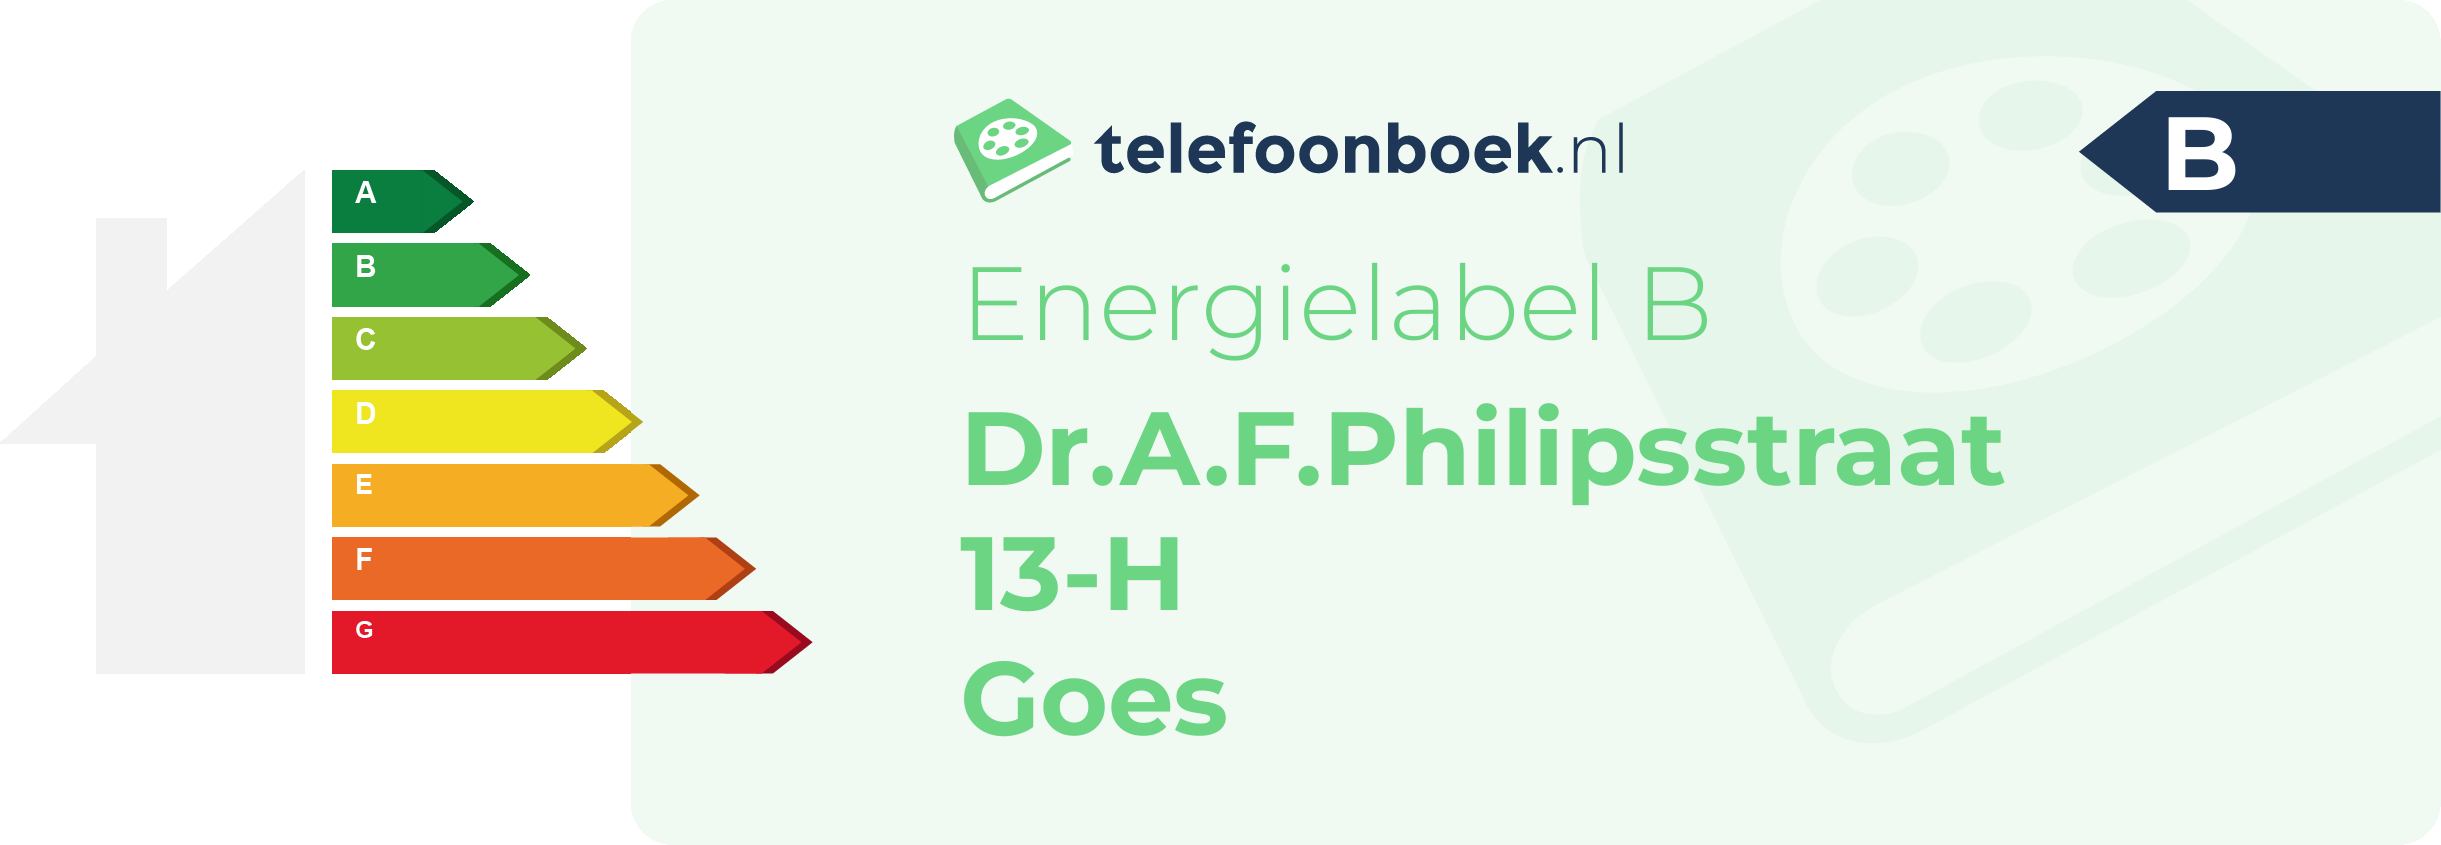 Energielabel Dr.A.F.Philipsstraat 13-H Goes